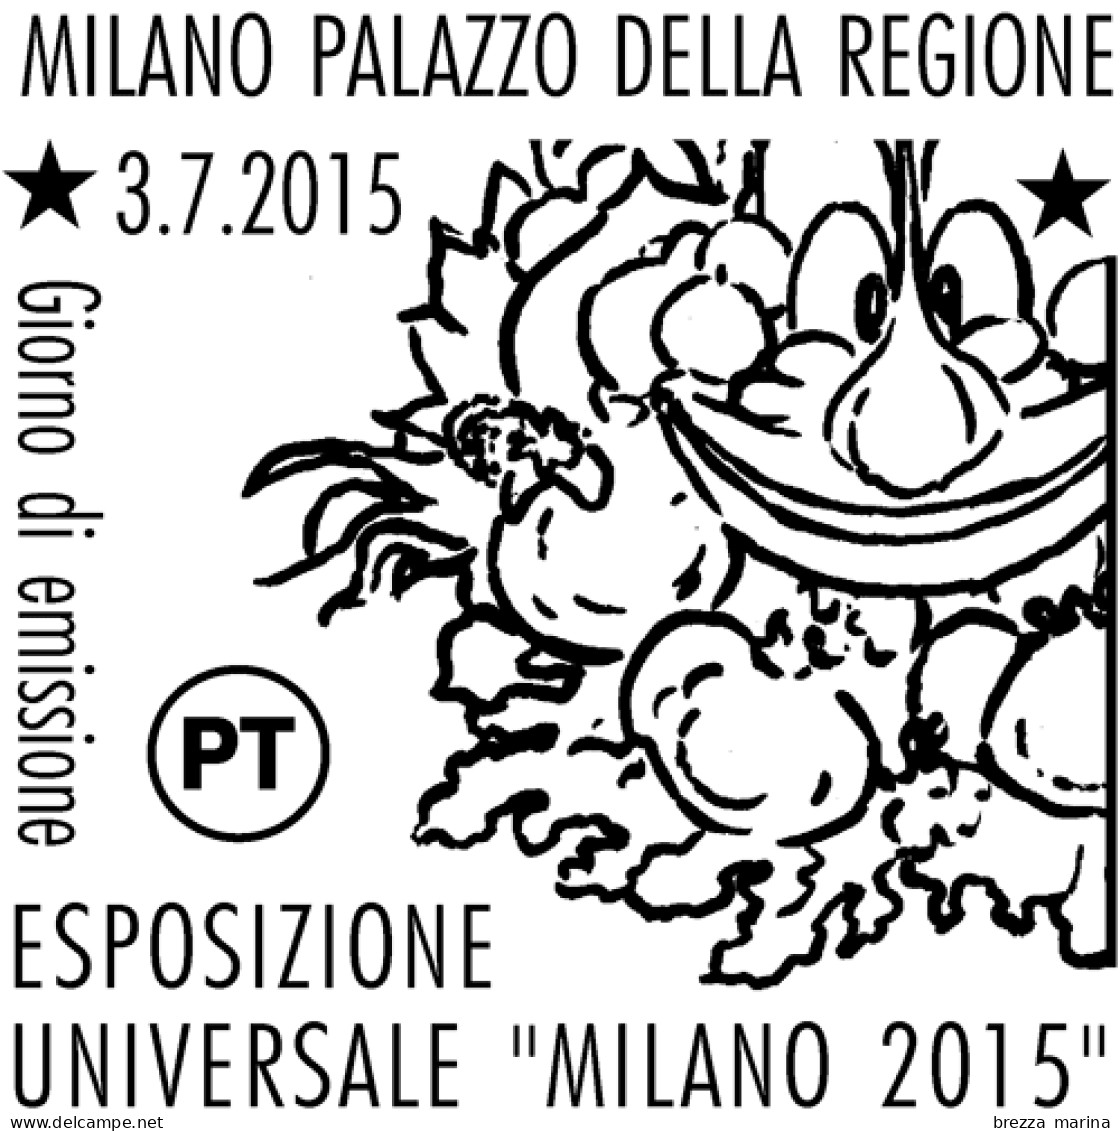 ITALIA - Usato - 2015 - Expo Milano 2015 - Logo E Mascotte - 0,80 - 2011-20: Usados